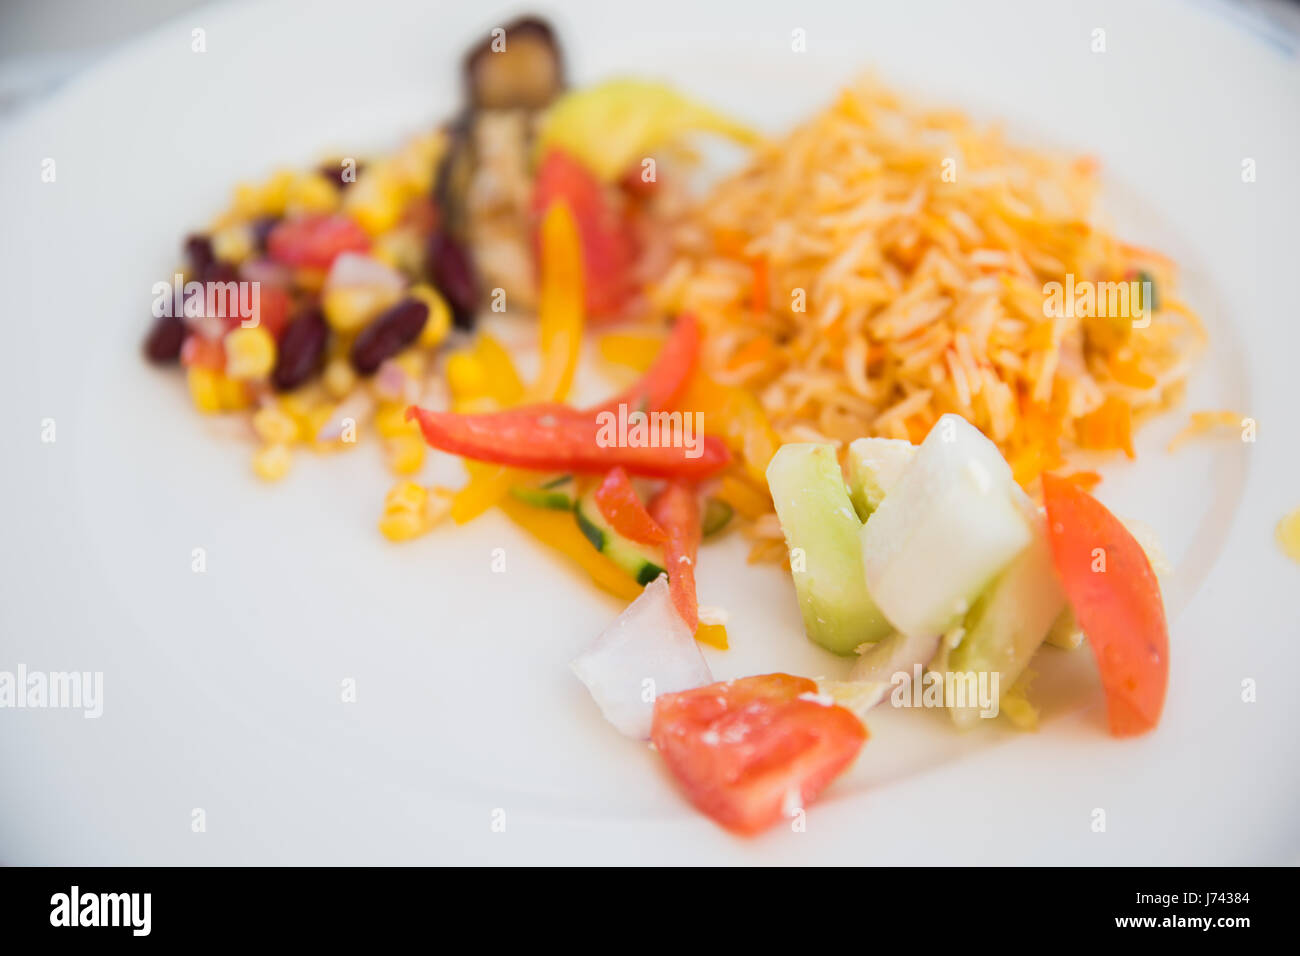 vegetable salad and garnish on plate Stock Photo